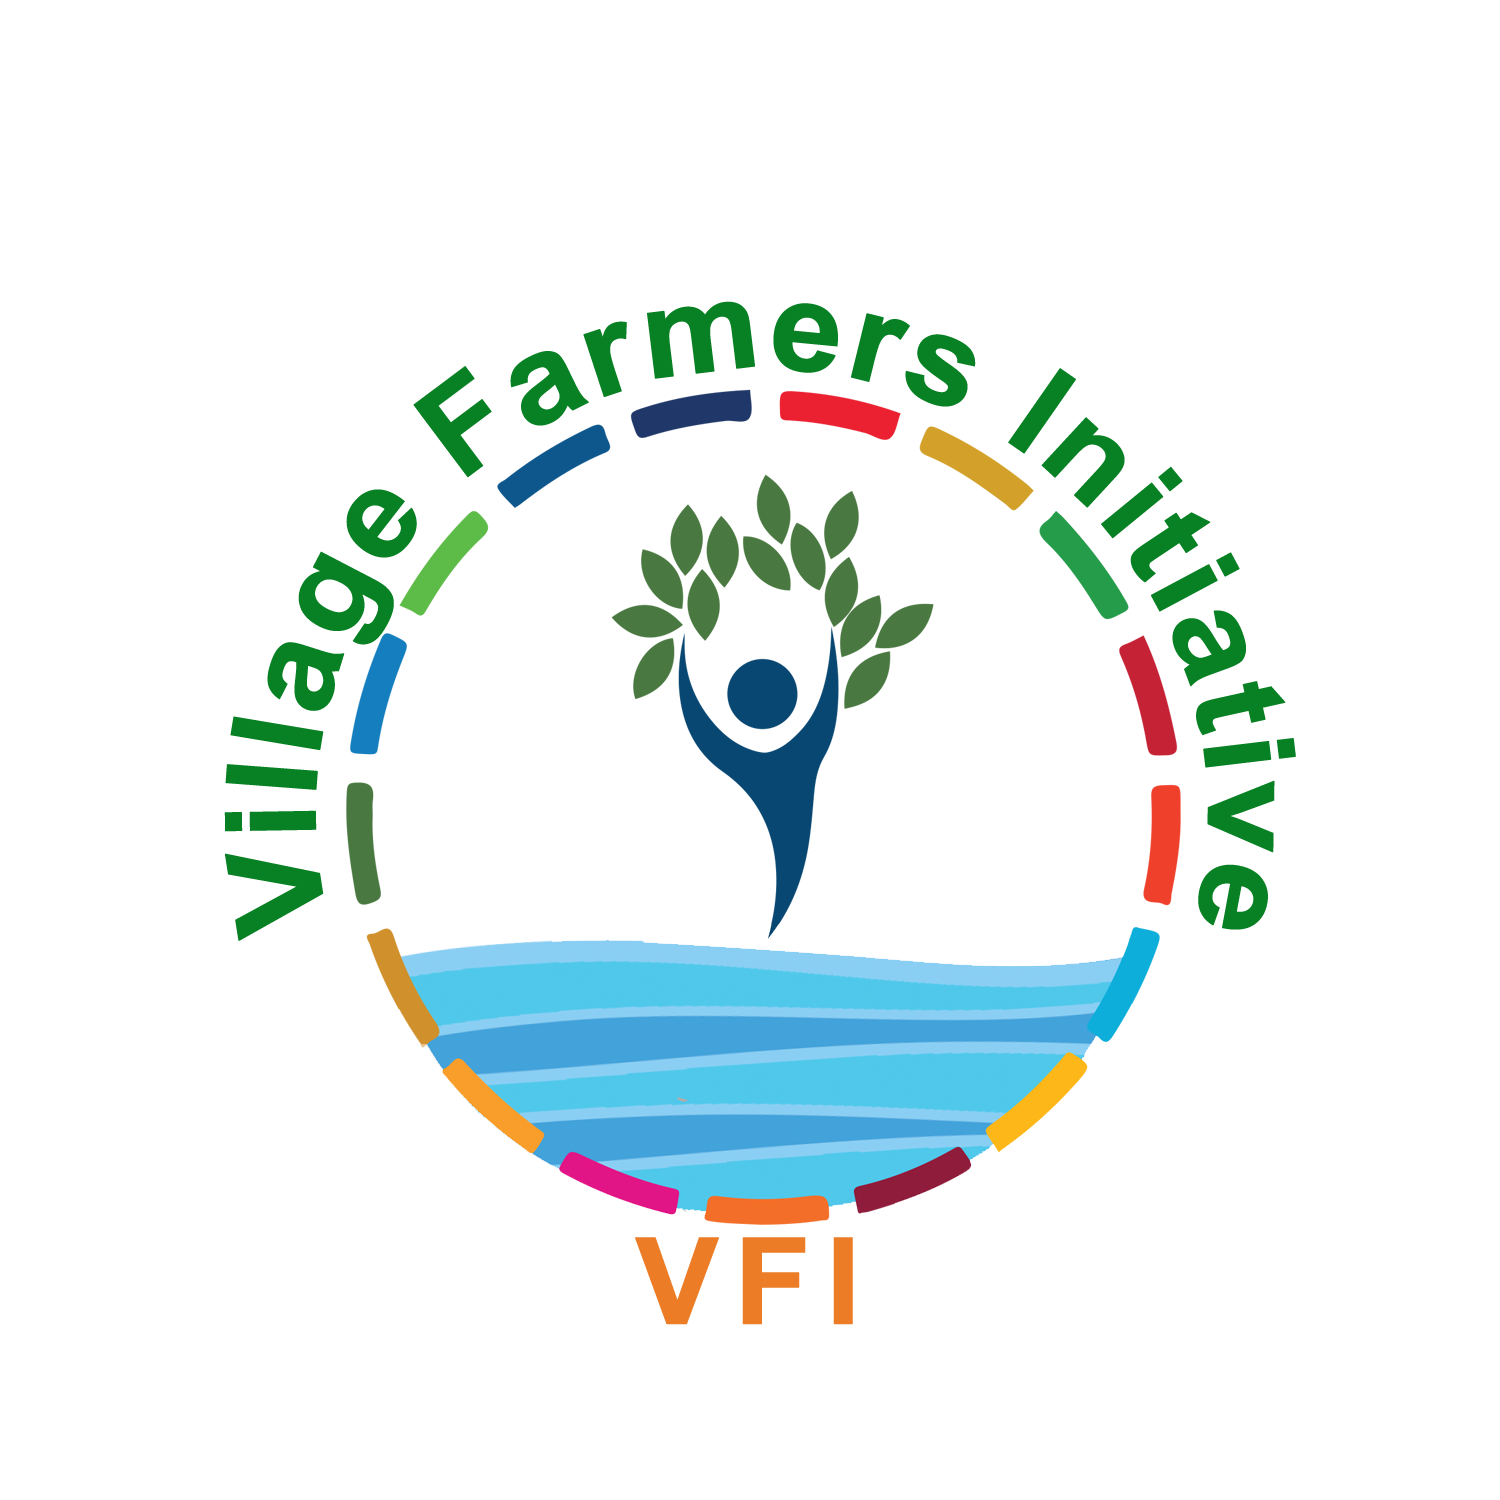 Village Farmers Initiative